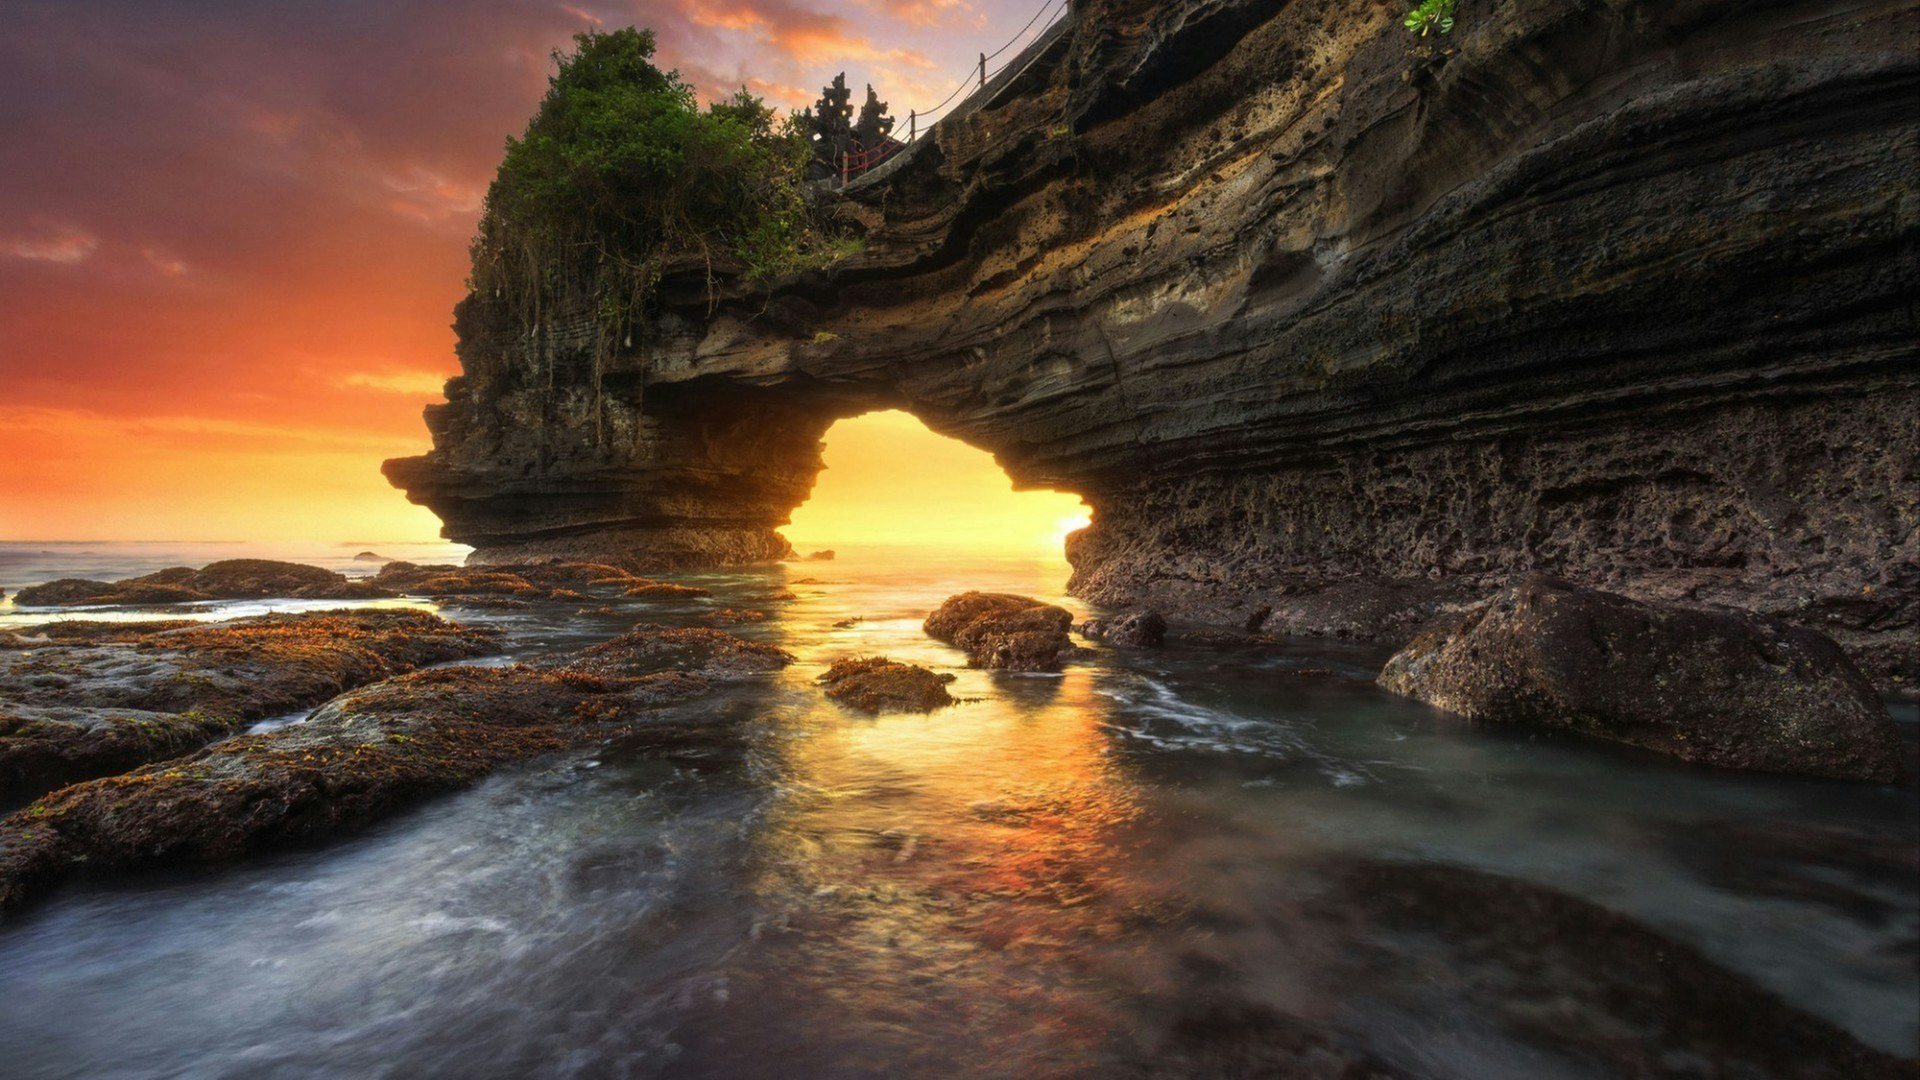 Sunset at Batu Bolong & Tanah Lot - Bali, Indonesia